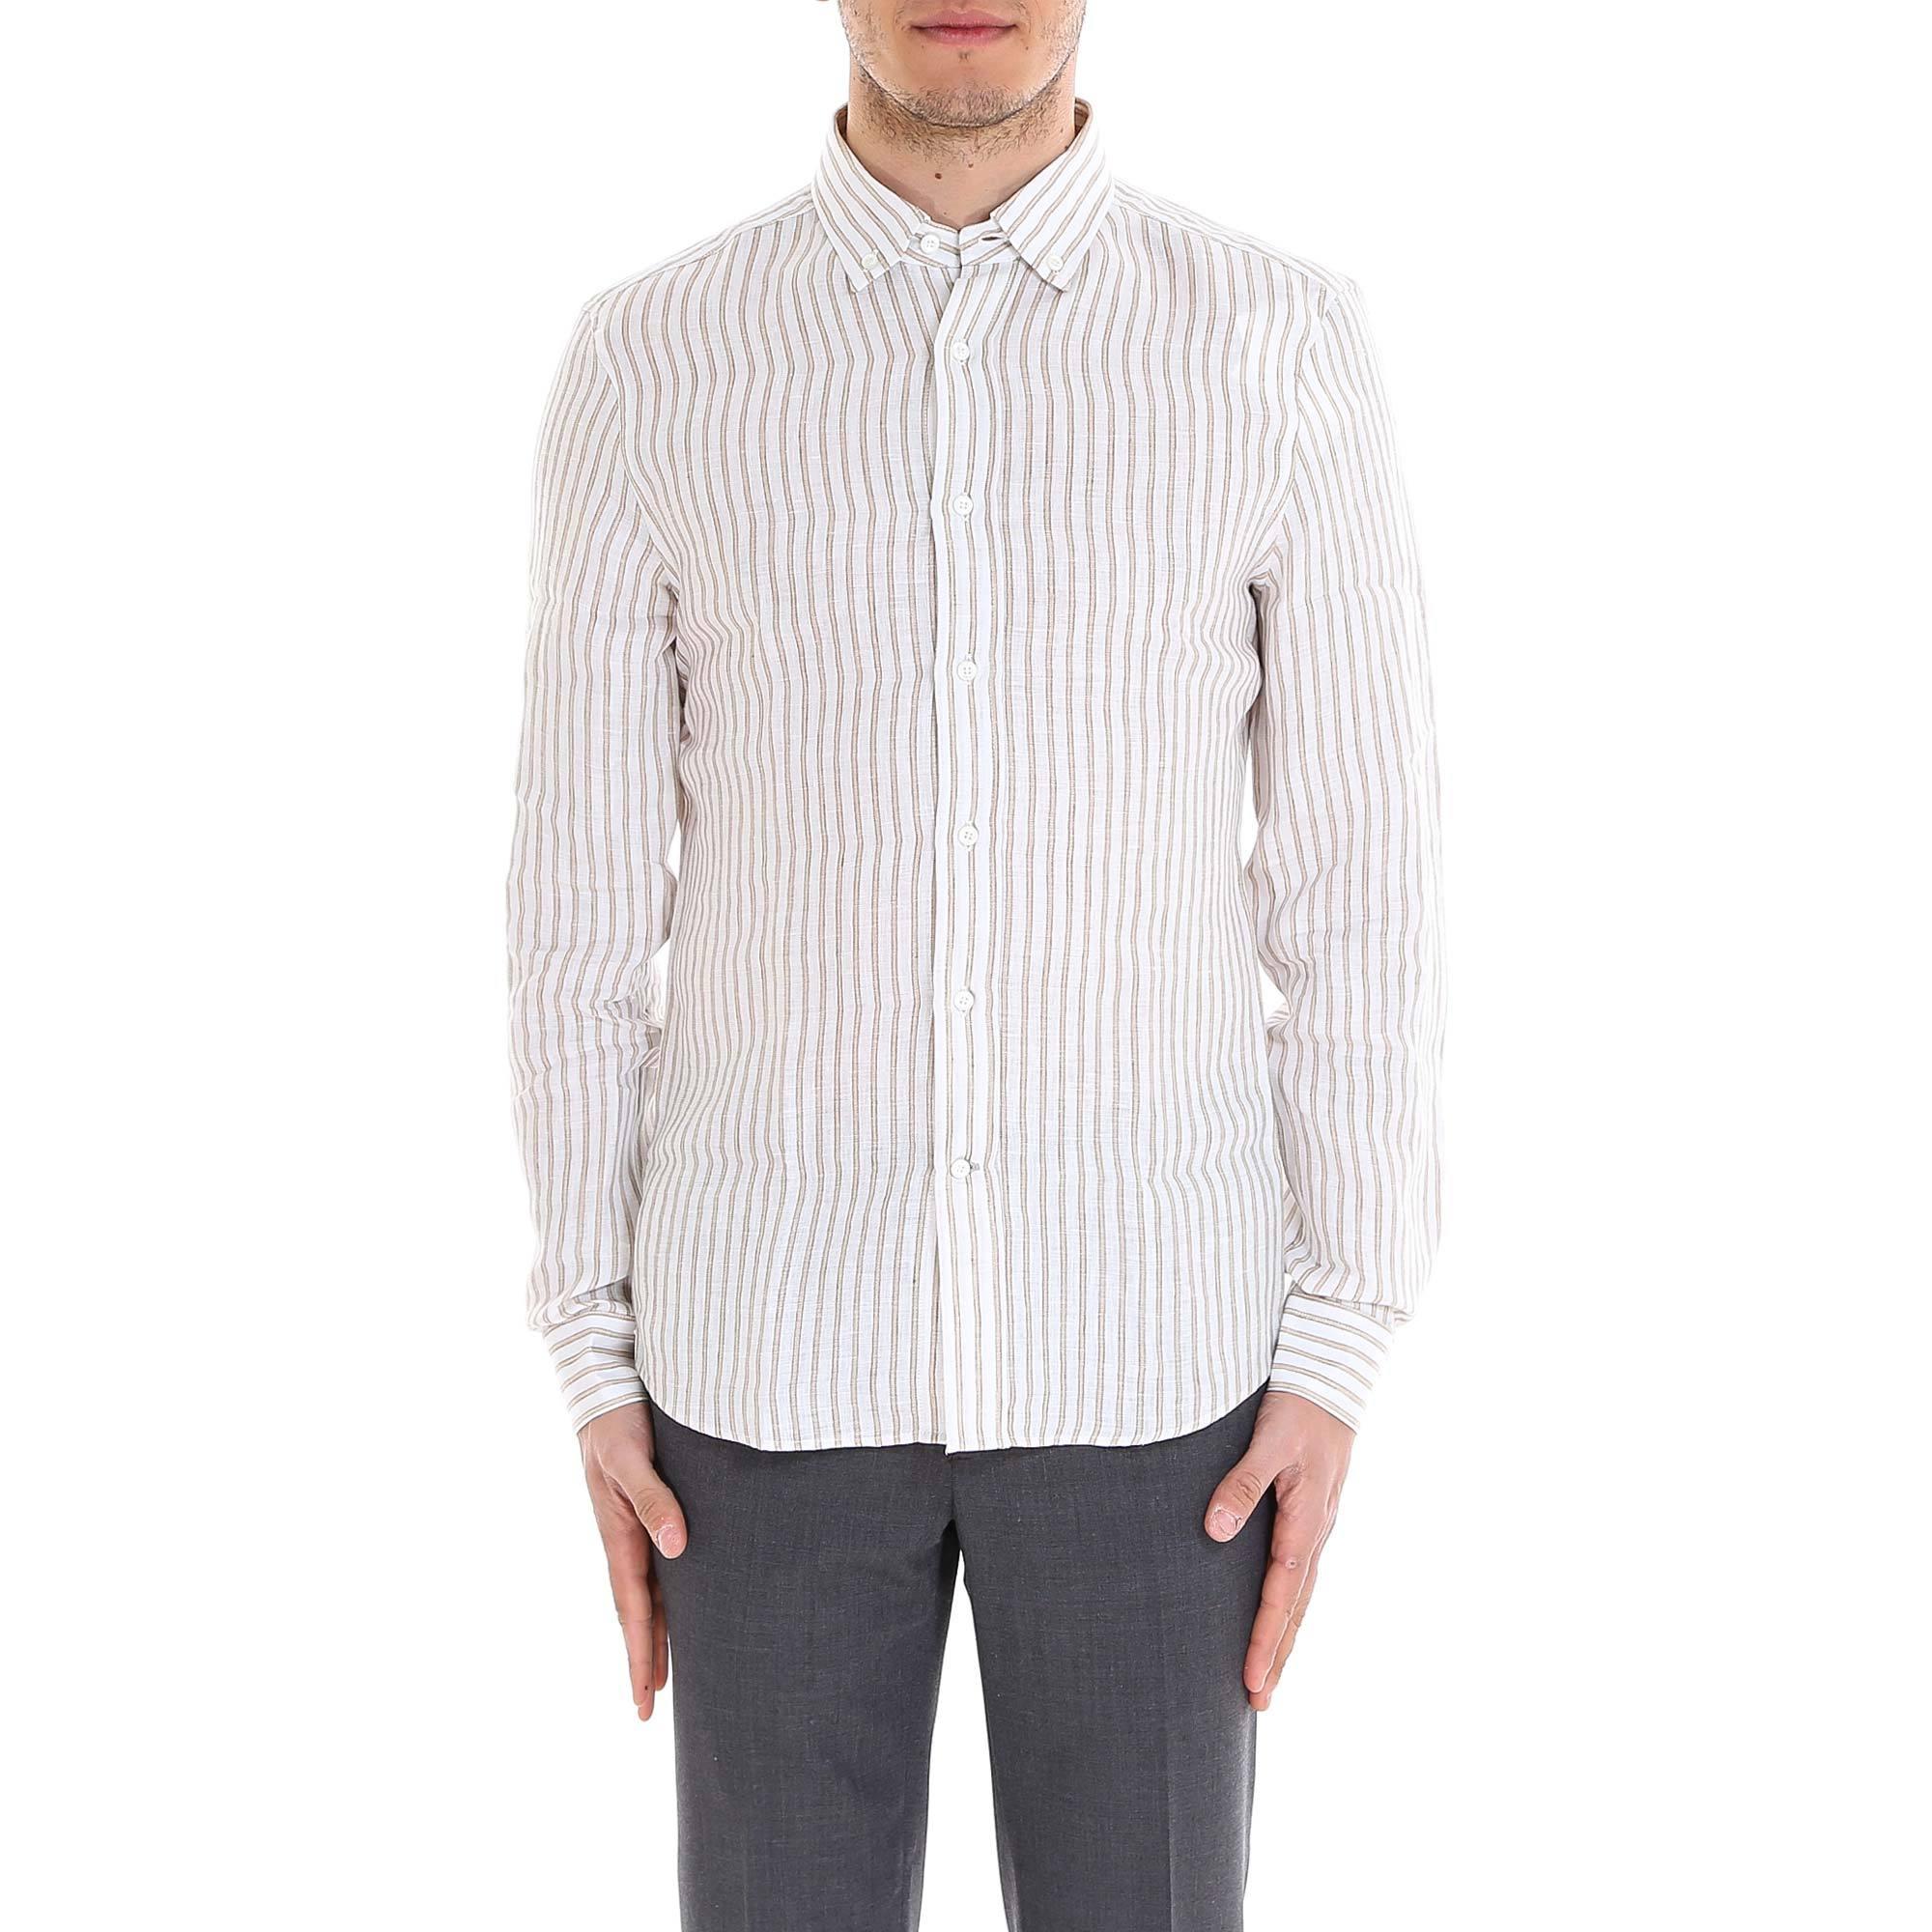 Brunello Cucinelli Striped Shirt in White for Men - Lyst